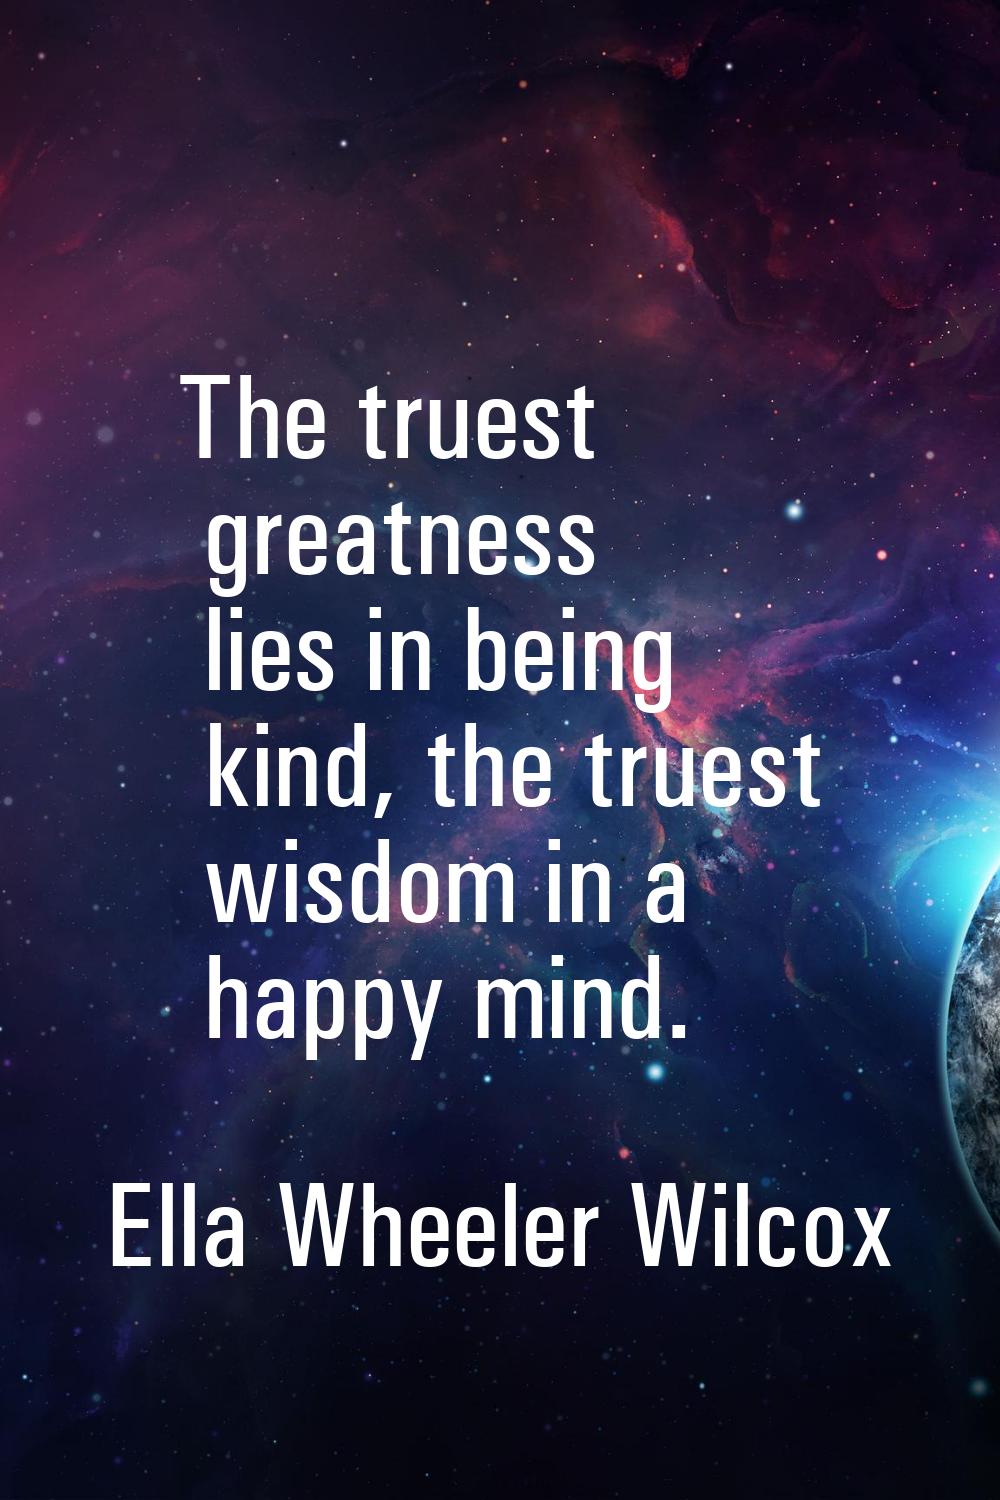 The truest greatness lies in being kind, the truest wisdom in a happy mind.